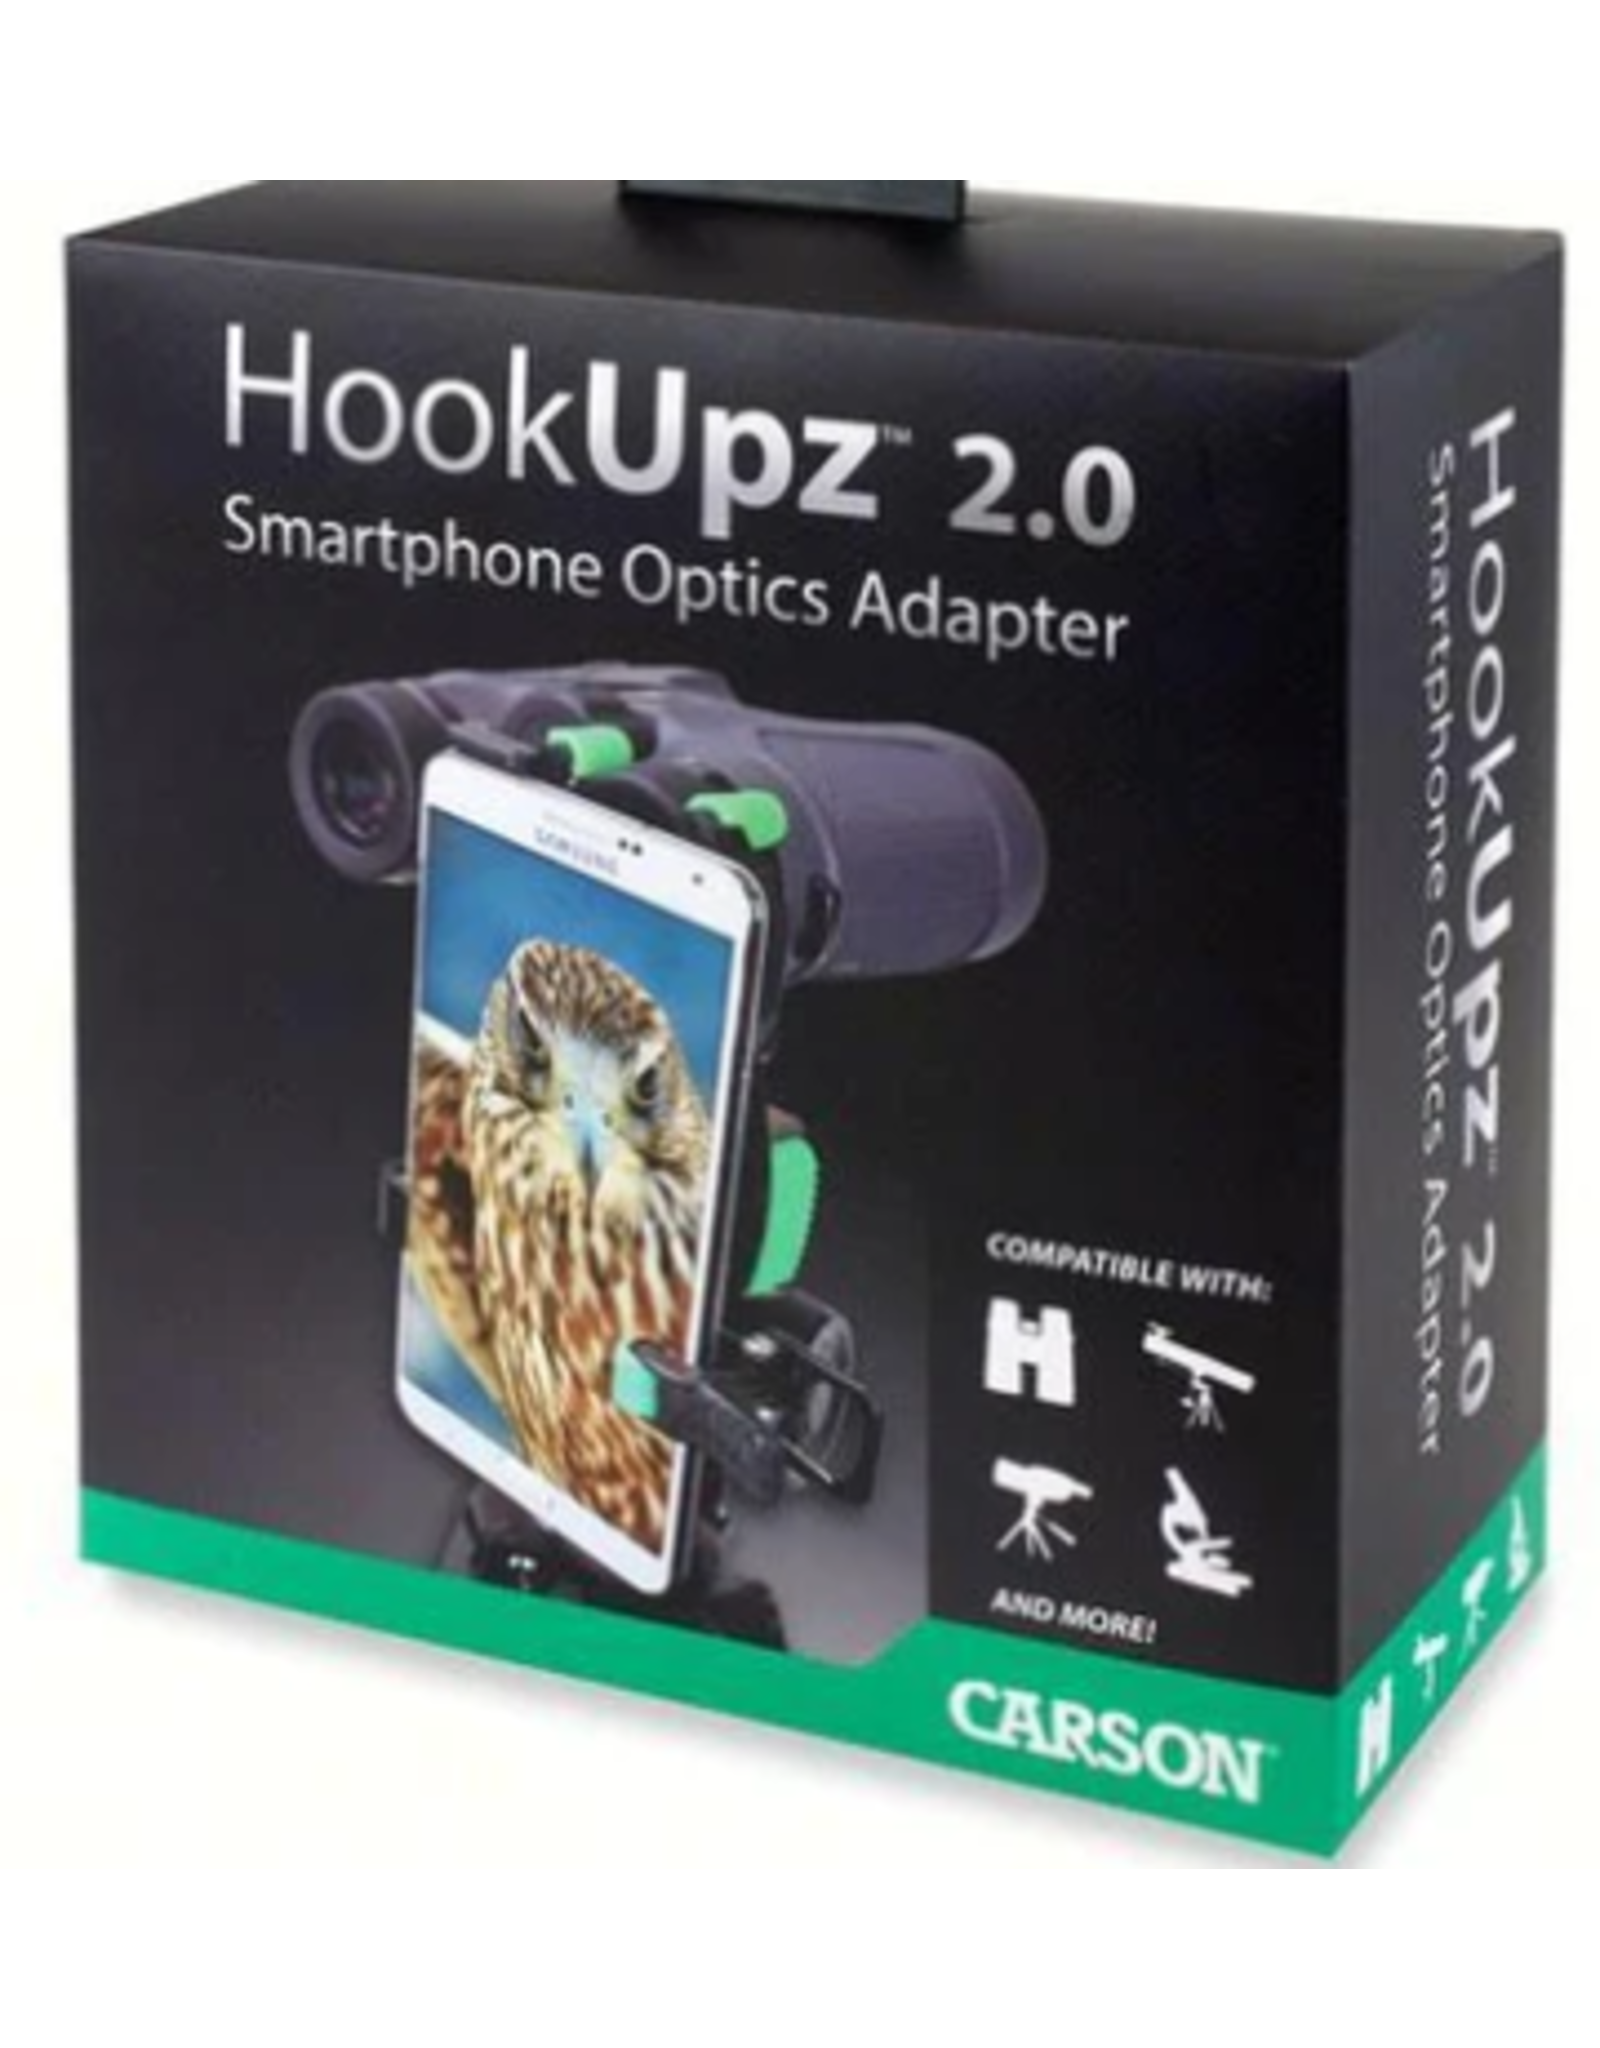 CARSON HOOK UPZ 2.0 SMARTPHONE OPTICS ADAPTER